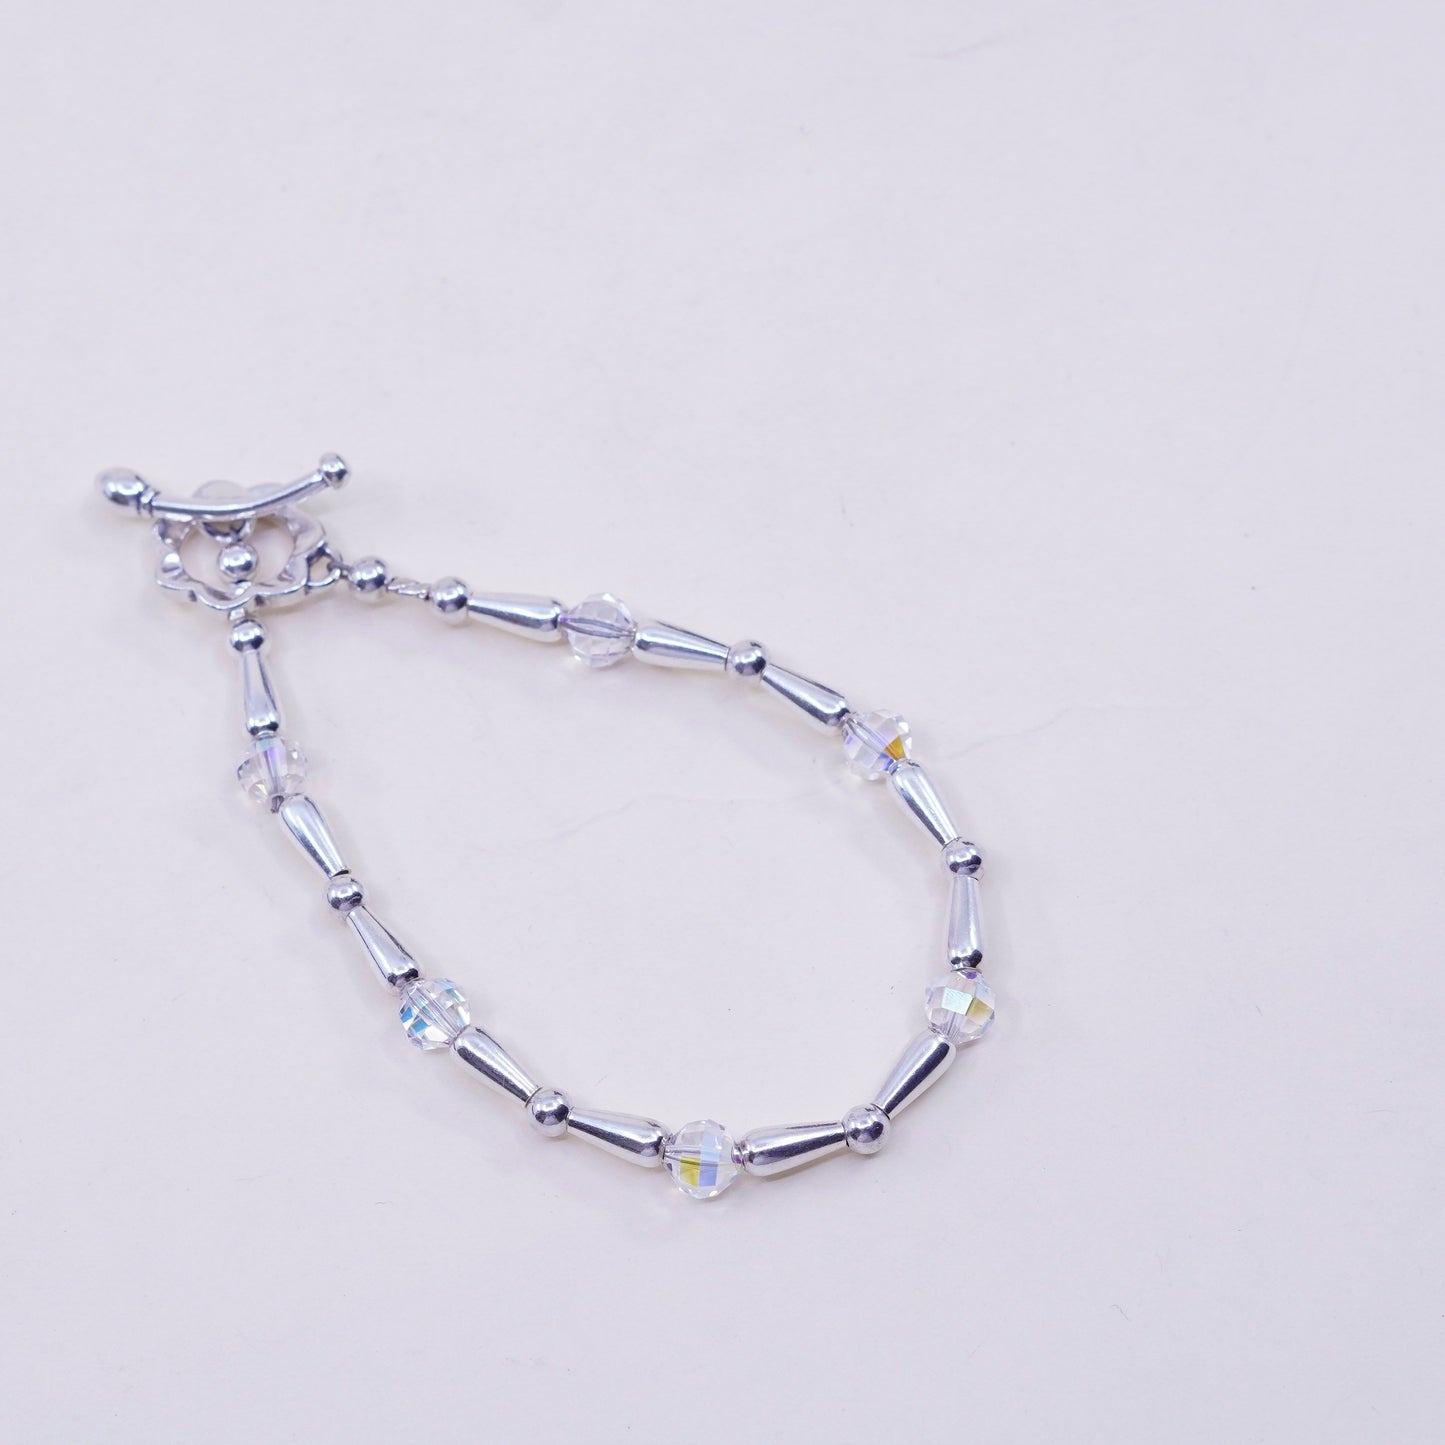 6.75”, Vintage handmade sterling 925 silver beads with bar bracelet